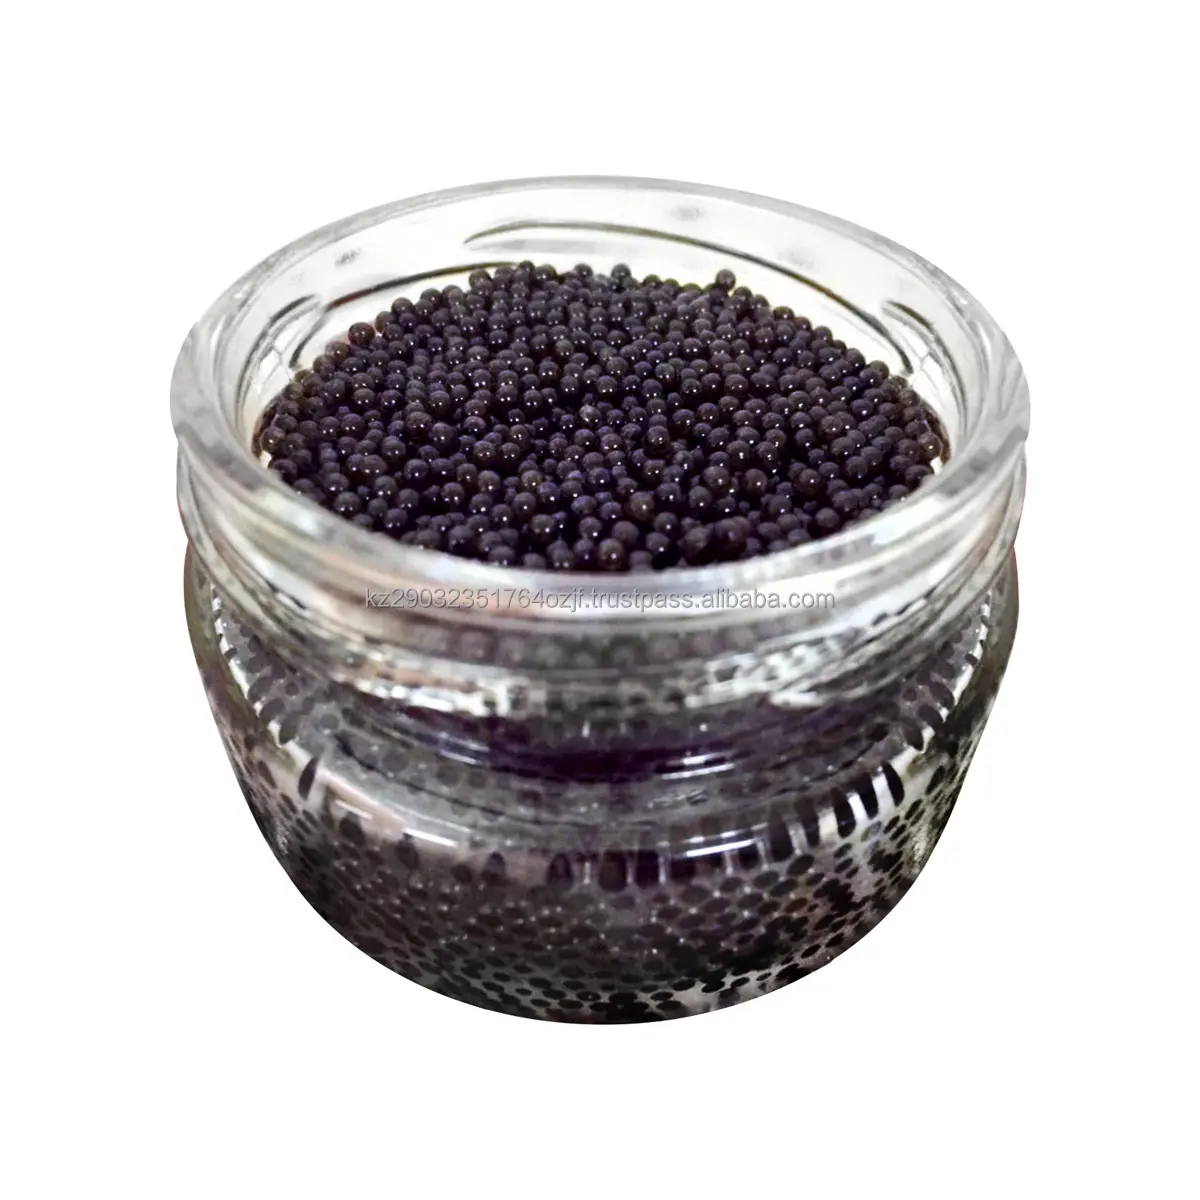 Gourmet farmed sterlet caviar packaged in glass jar from fish farm